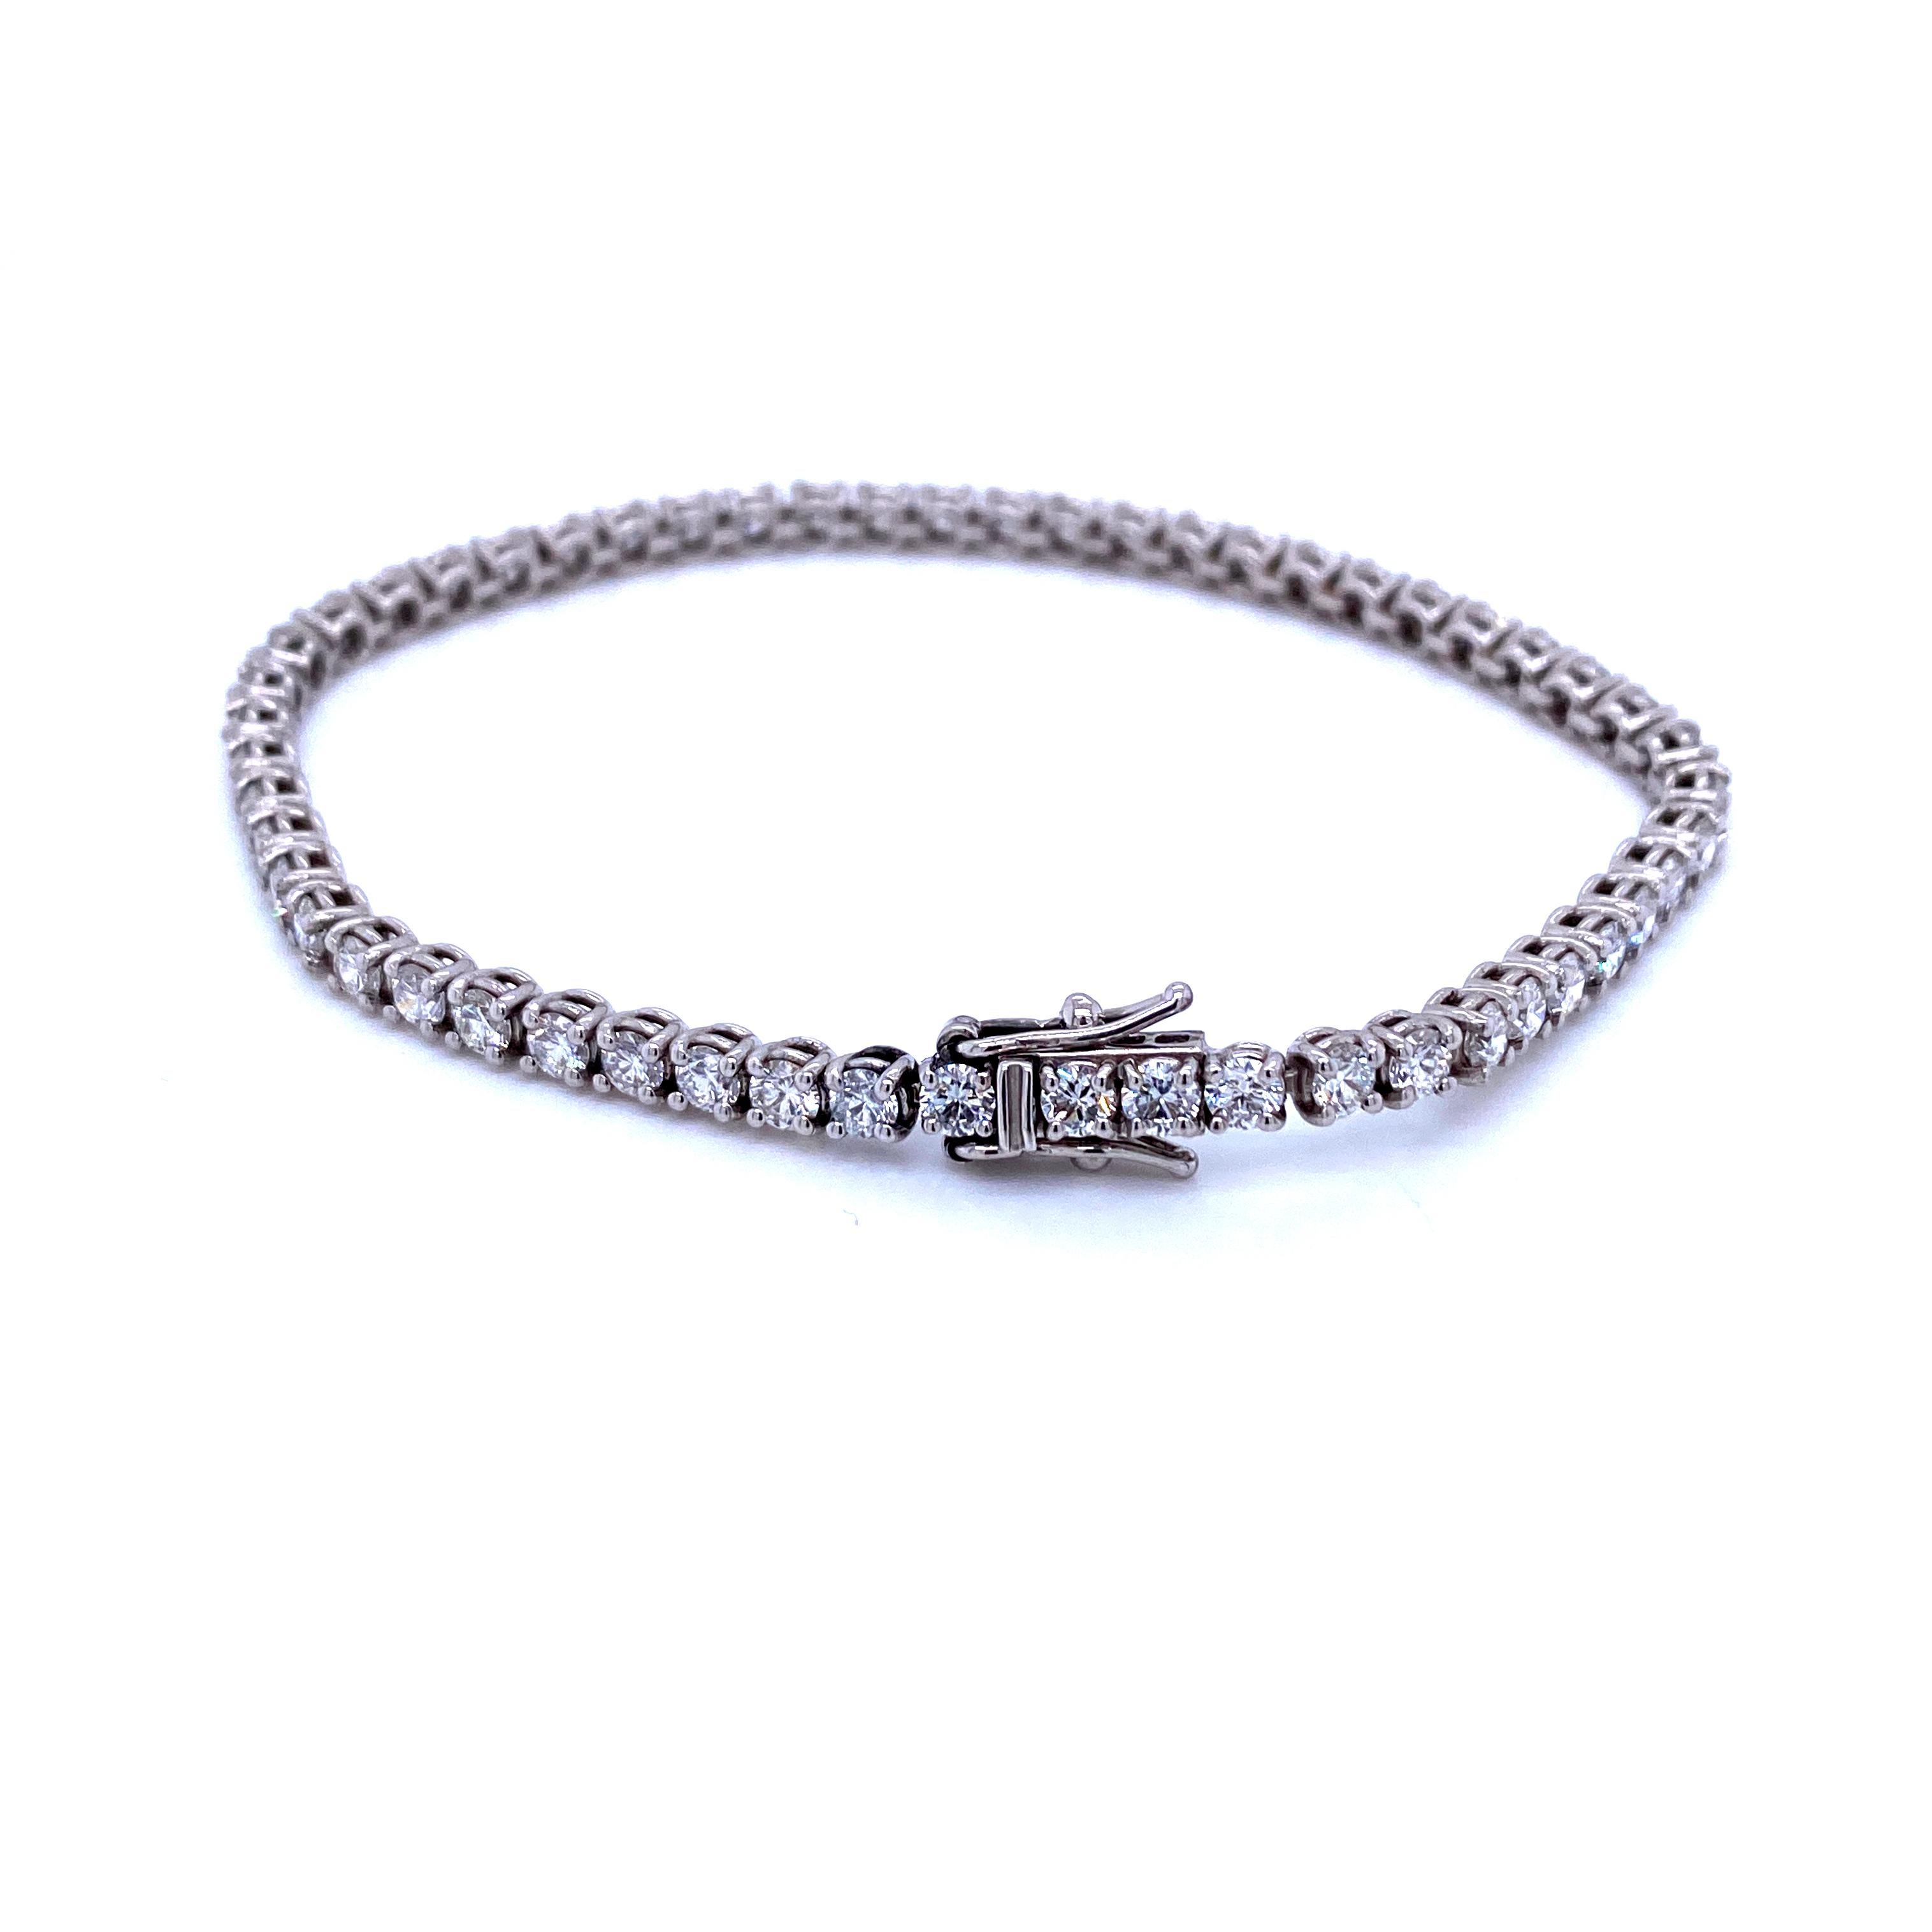 5 carat tennis bracelet